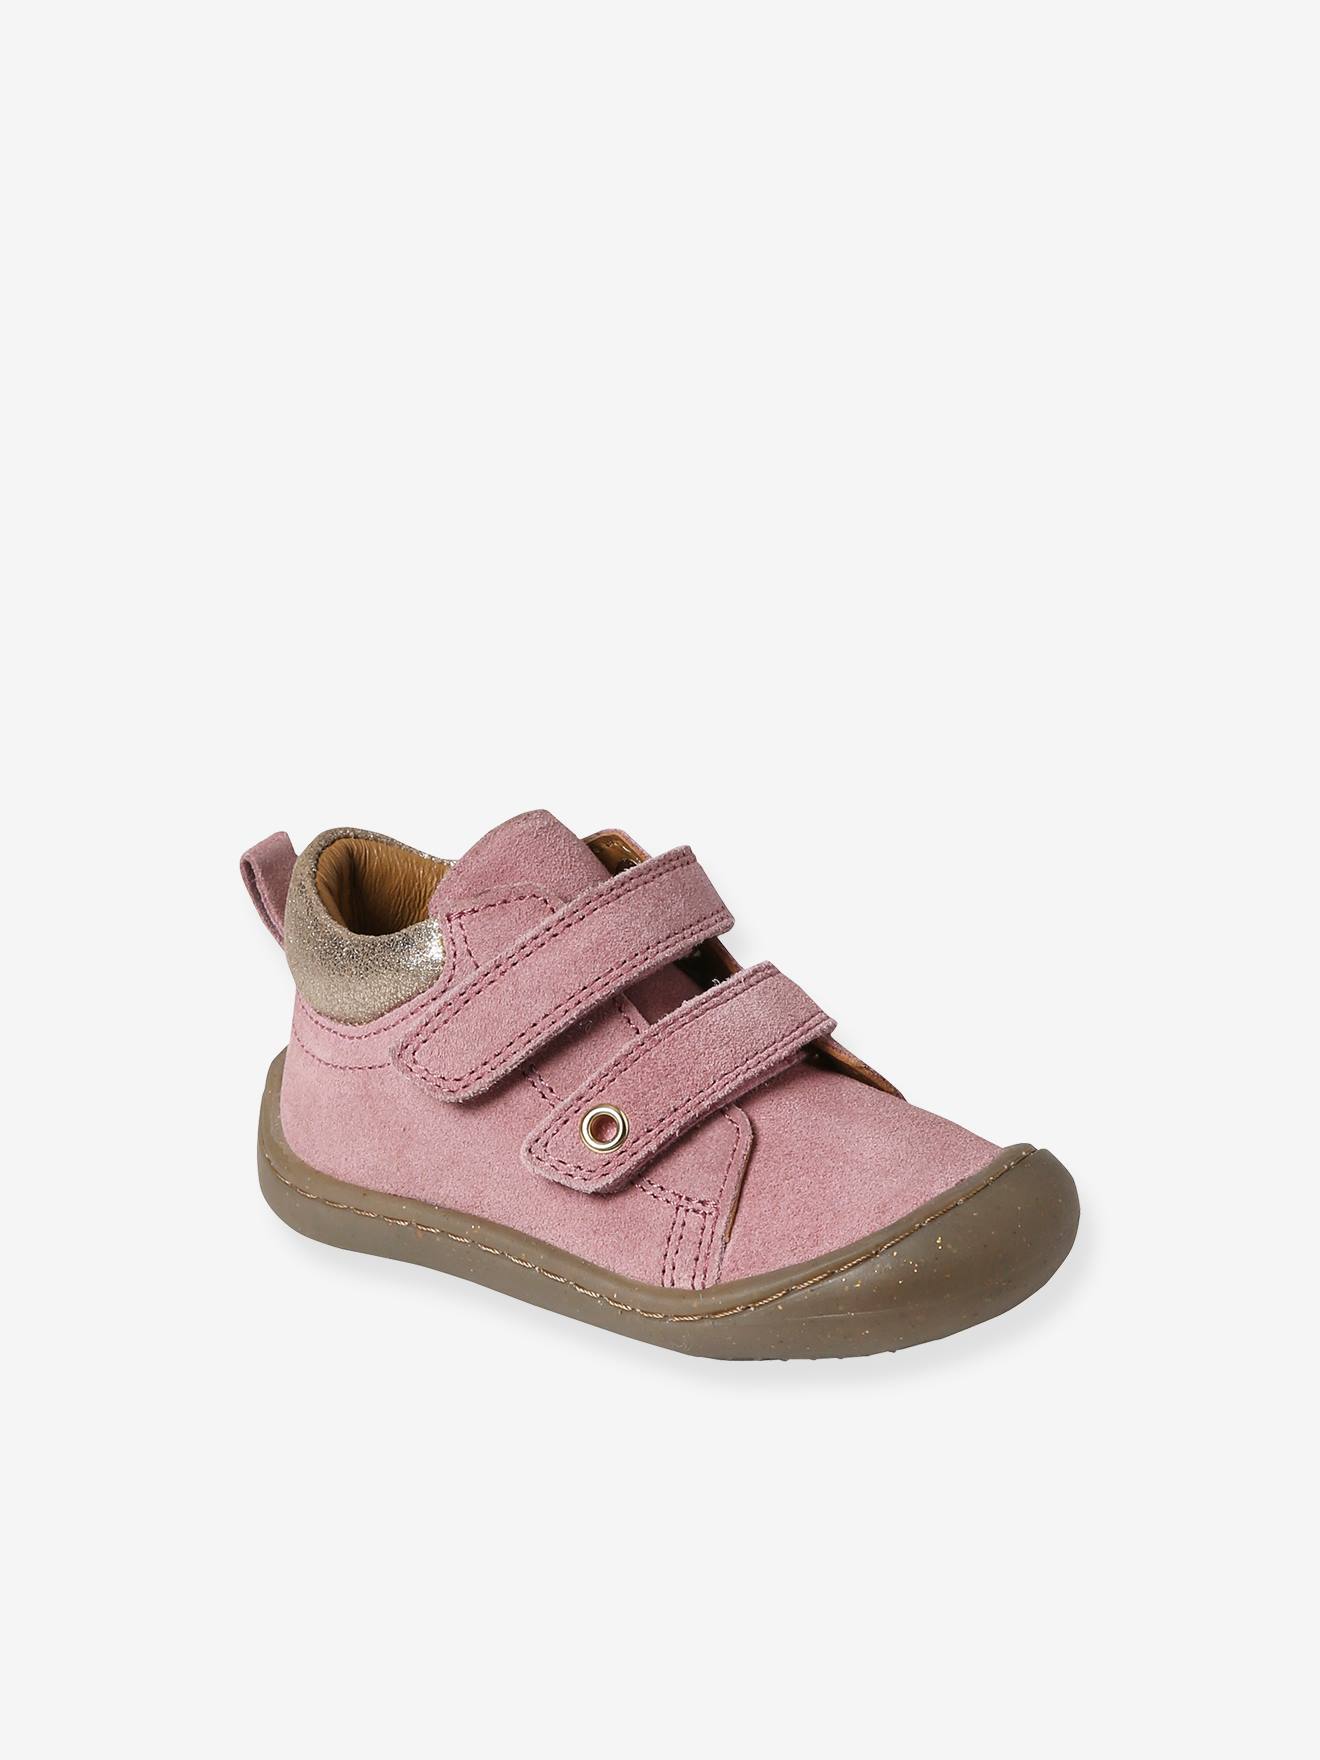 Pram Shoes in Soft Leather, Hook&Loop Strap, for Babies, Designed for Crawling Rose